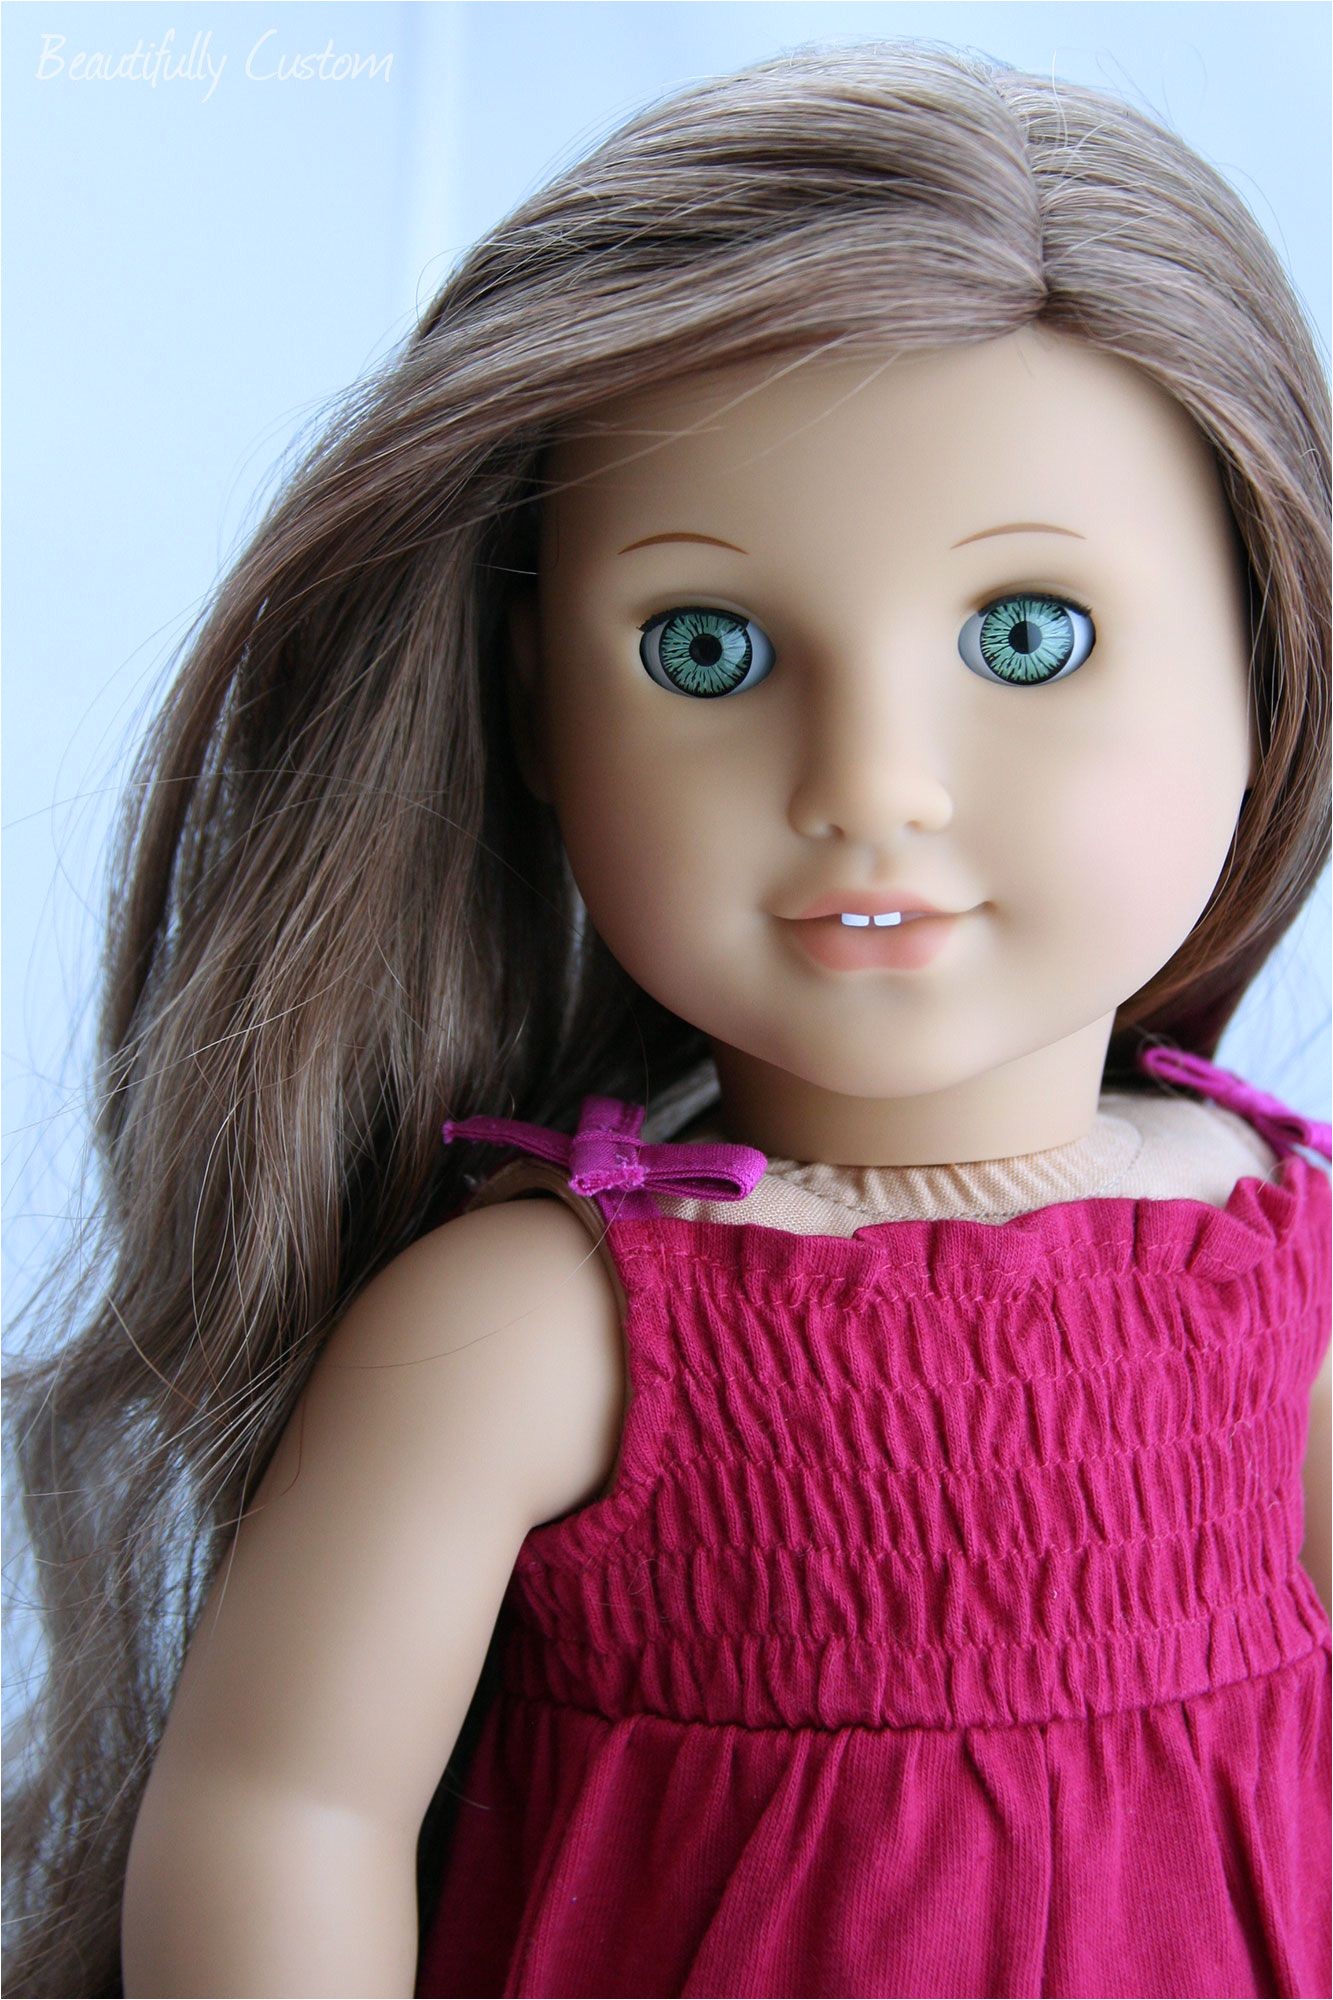 Custom OOAK American Girl Doll Aqua Mint Green Eyes and Long Caramel Brown Wavy Hair